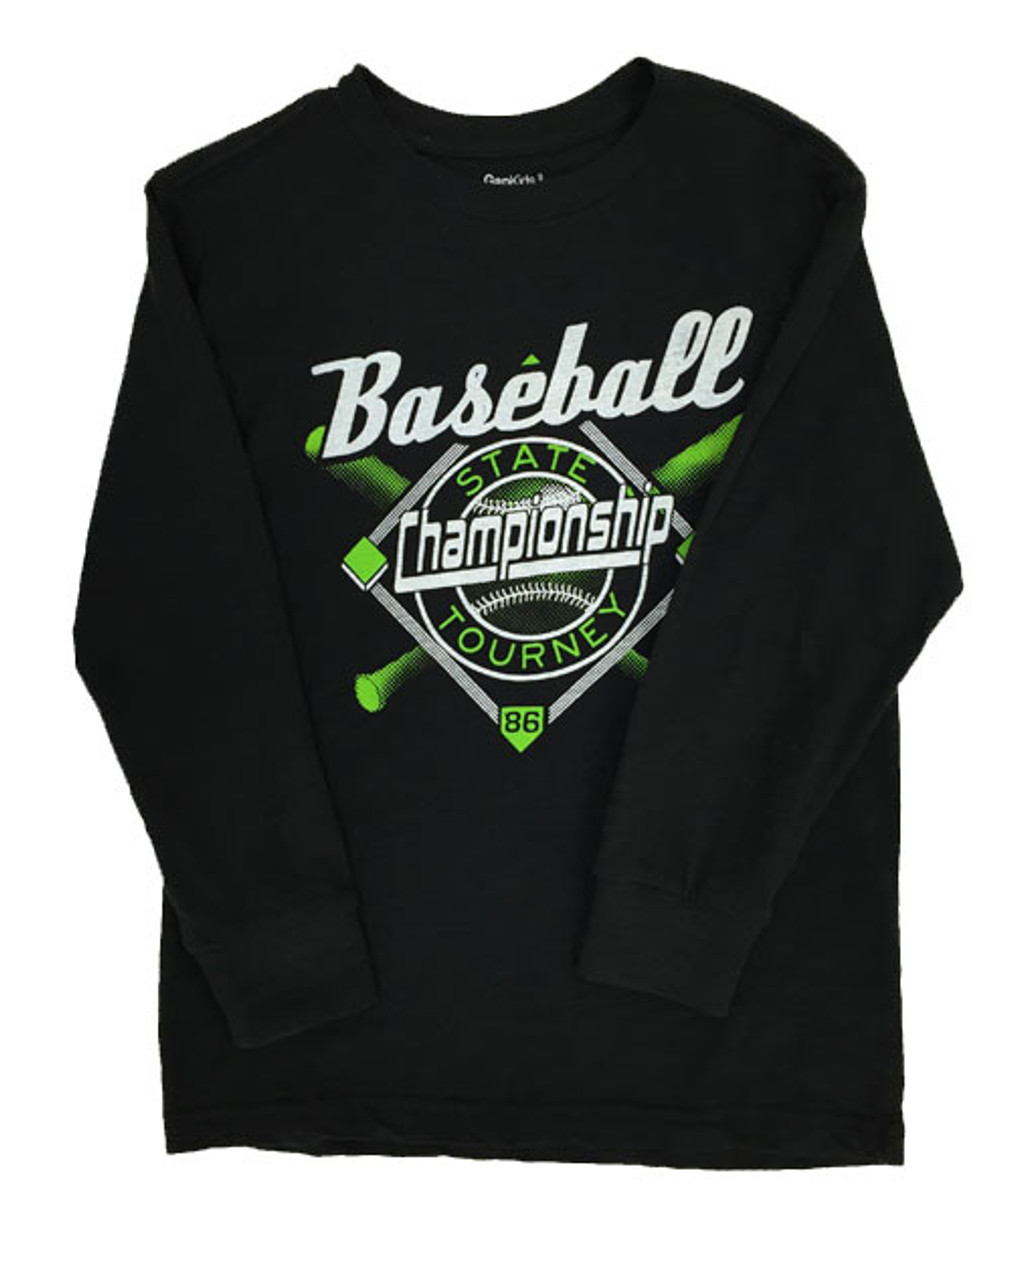 Gap Kids Boys Baseball Graphic Shirt   Berri Kids Boutique